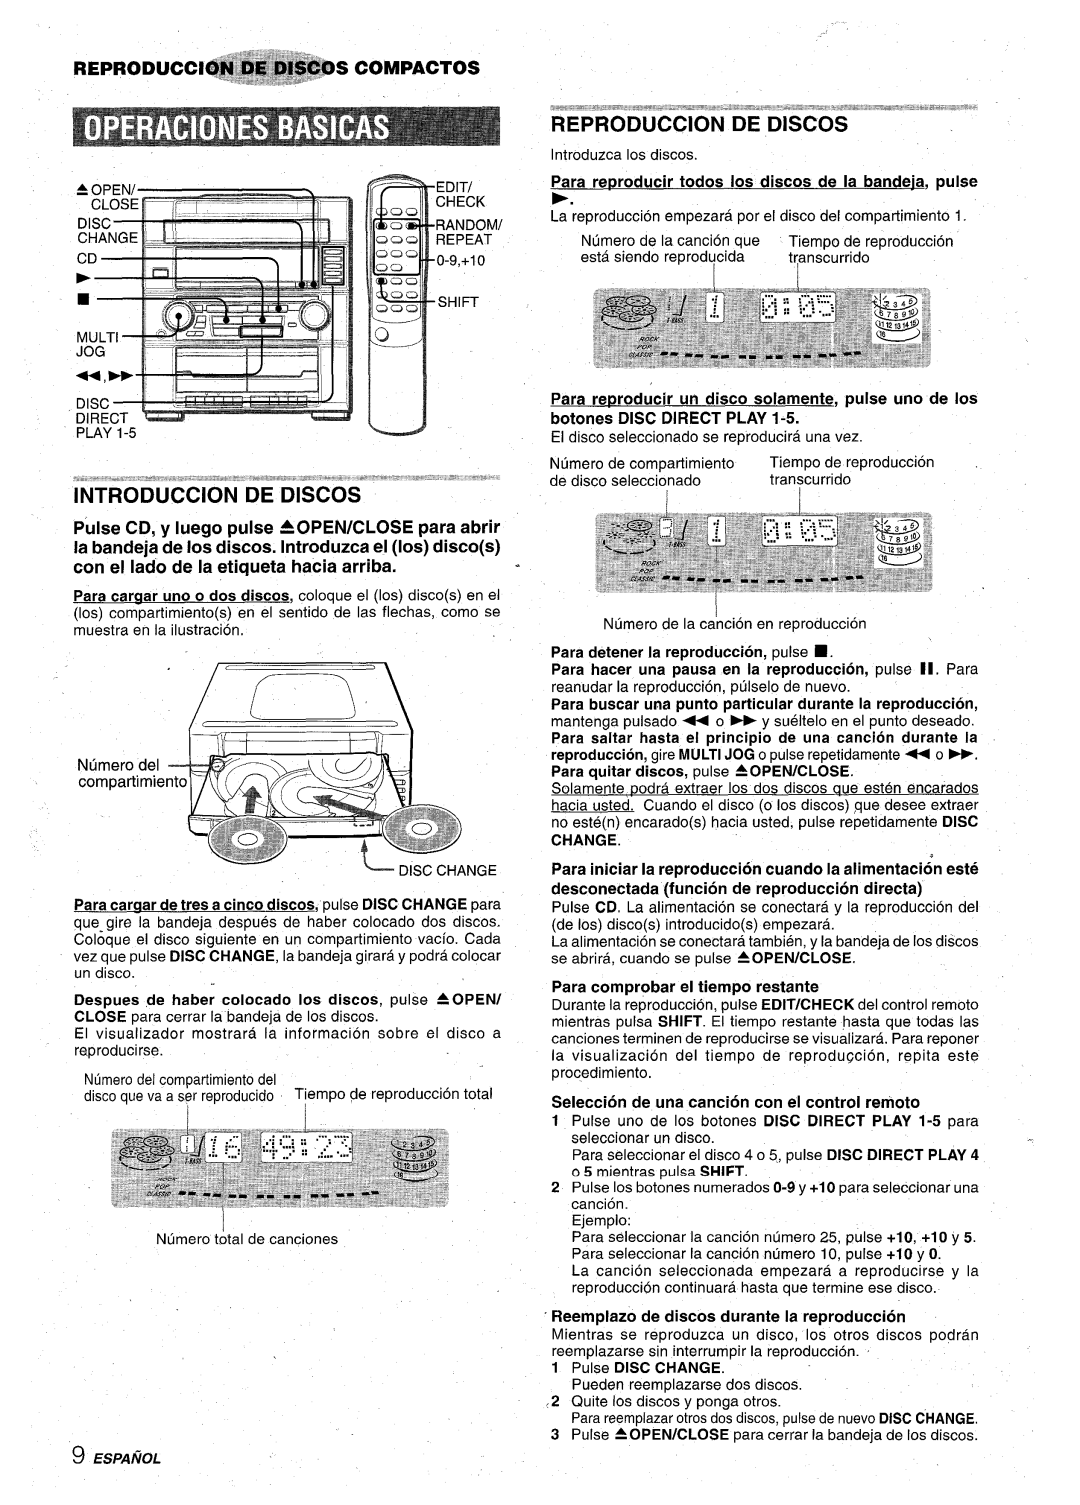 Aiwa XR-M75 manual Para rerxoducir todos Ios discos de la bandeja, pulse b, Para detener la reproduction, pulse W 